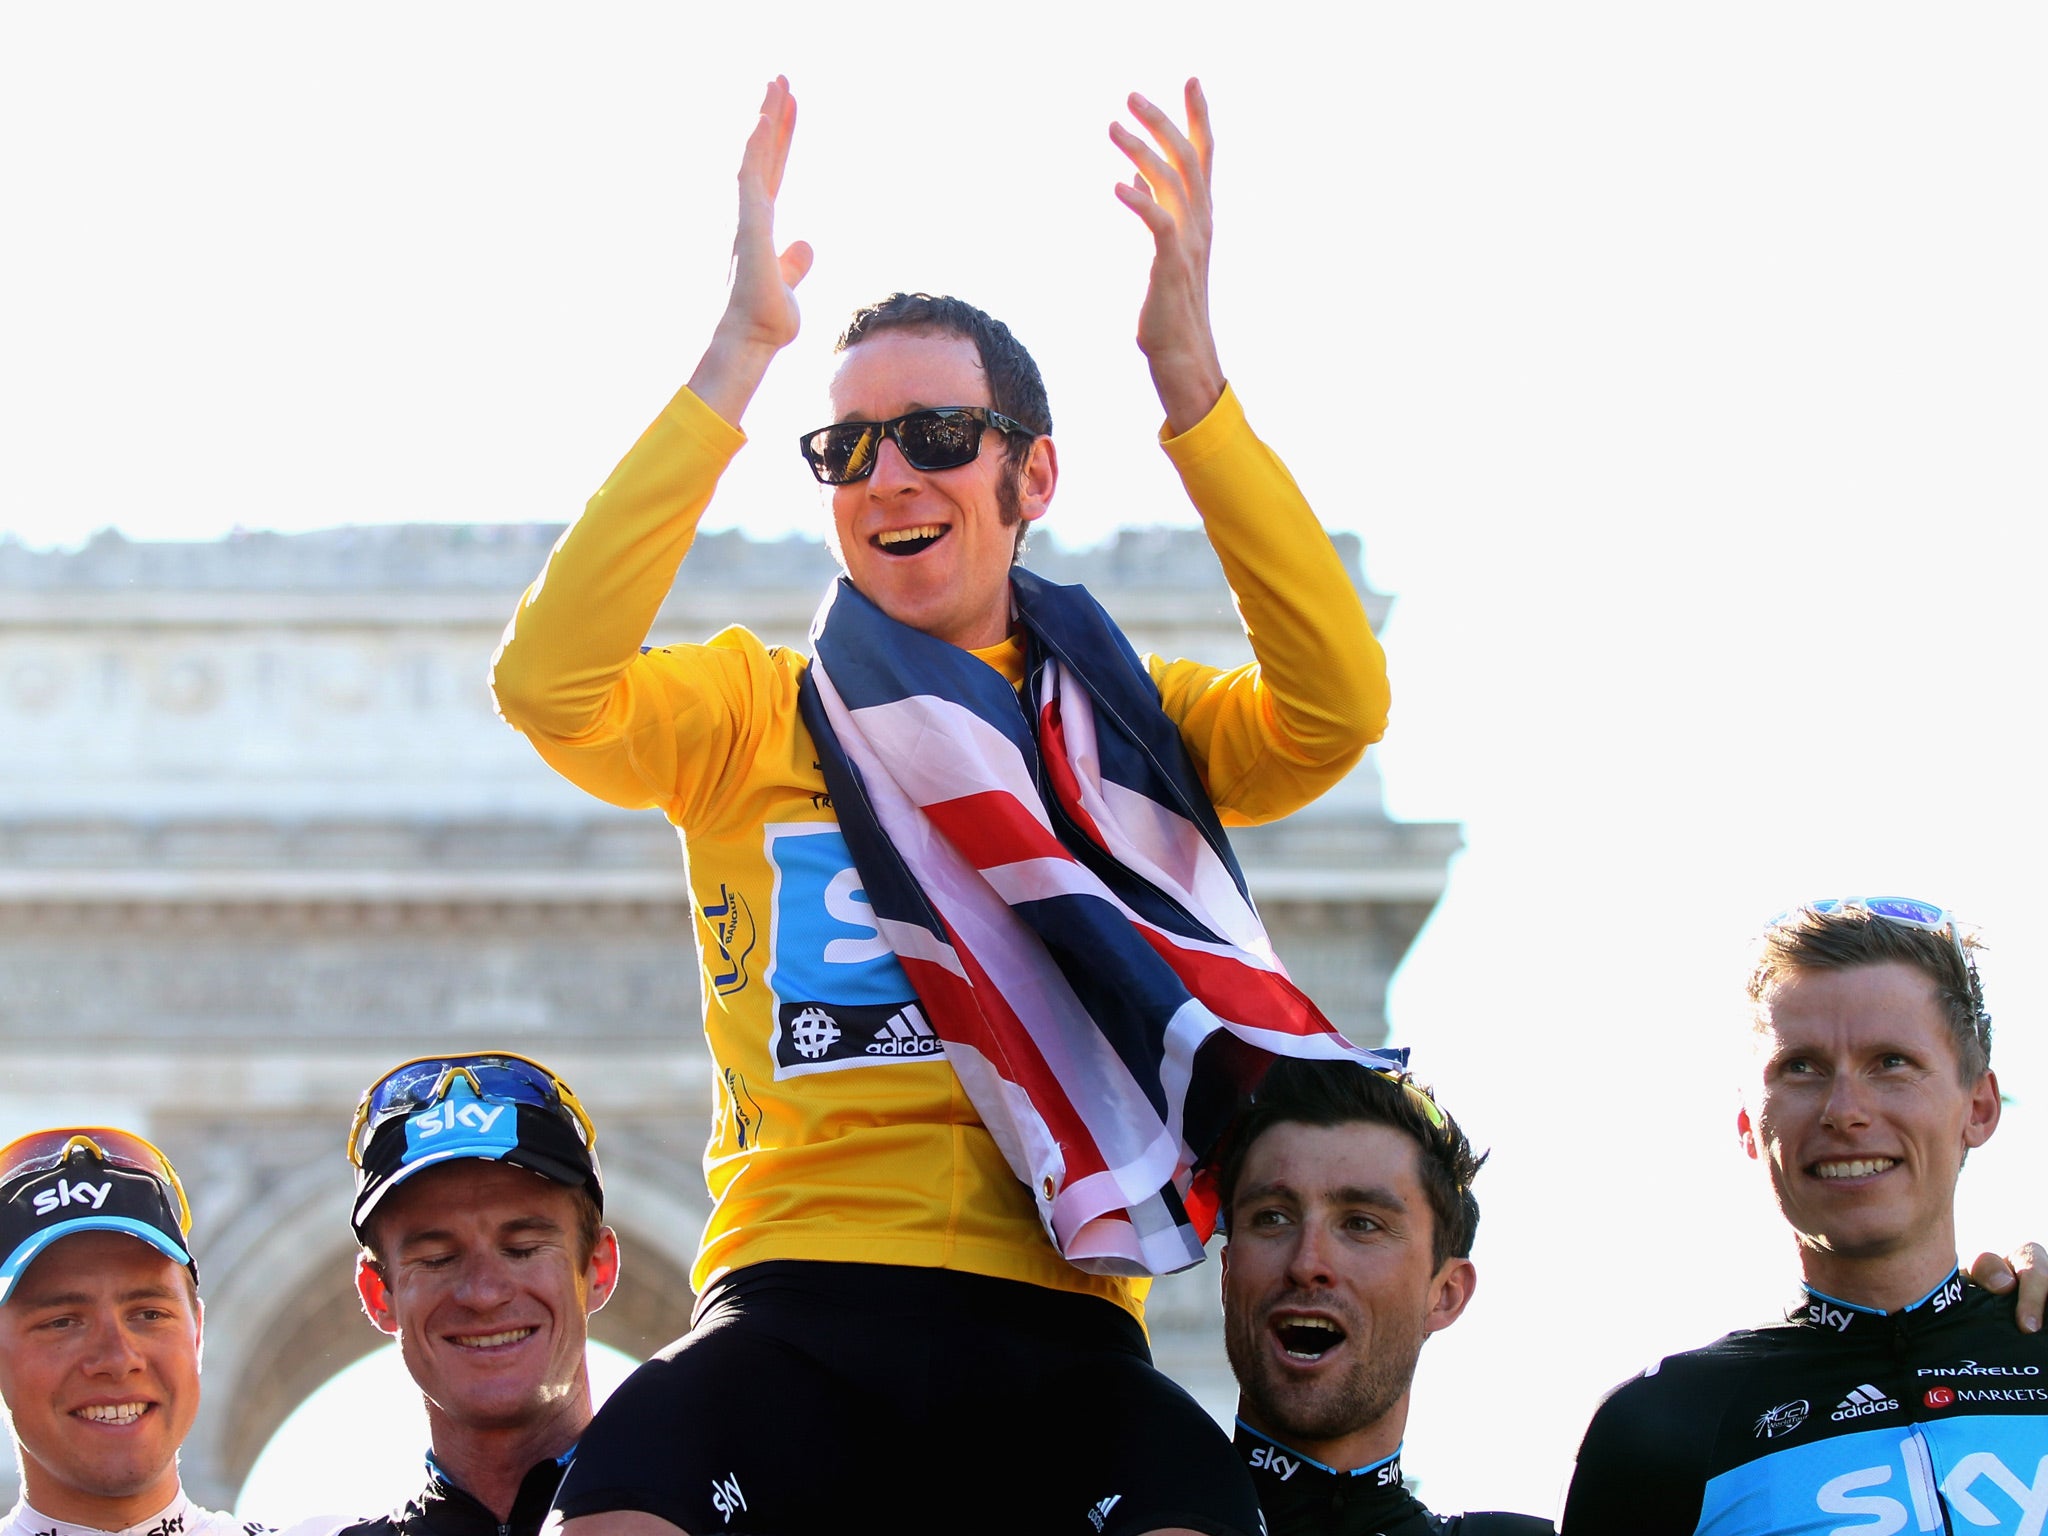 Bradley Wiggins pictured celebrating his Tour de France success in 2012